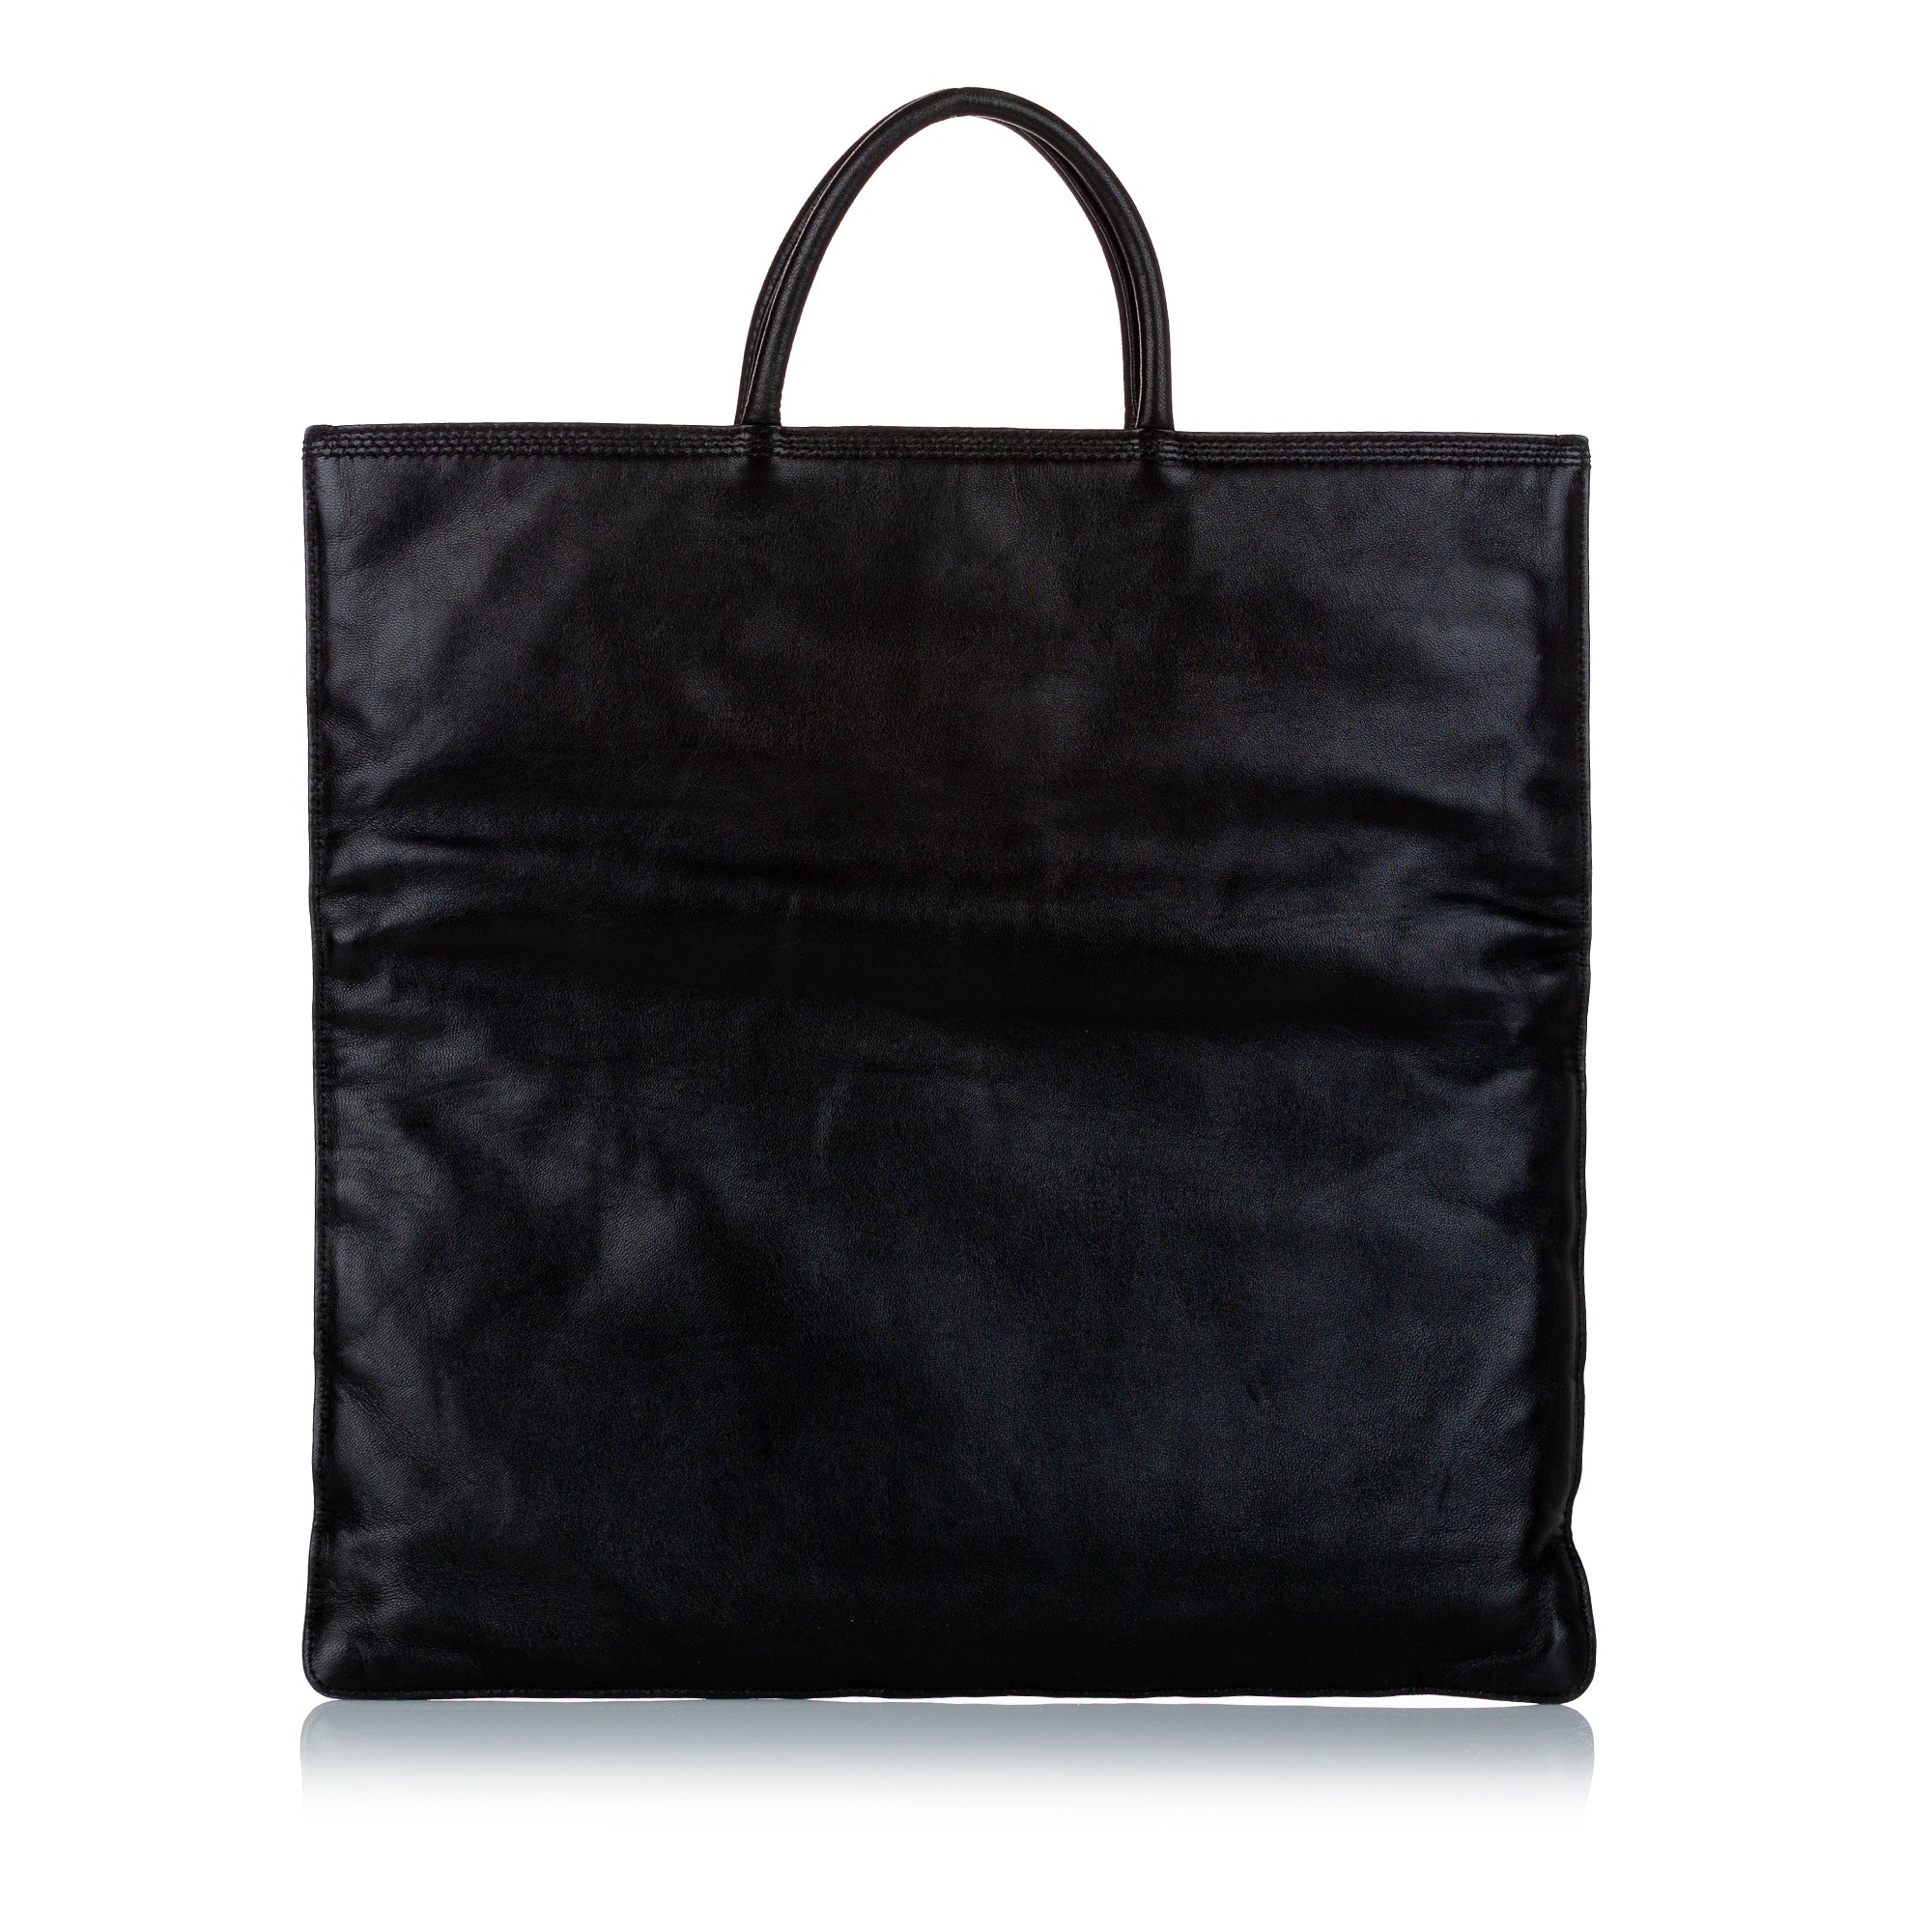 Black Loewe Leather Tote Bag - Designer Revival